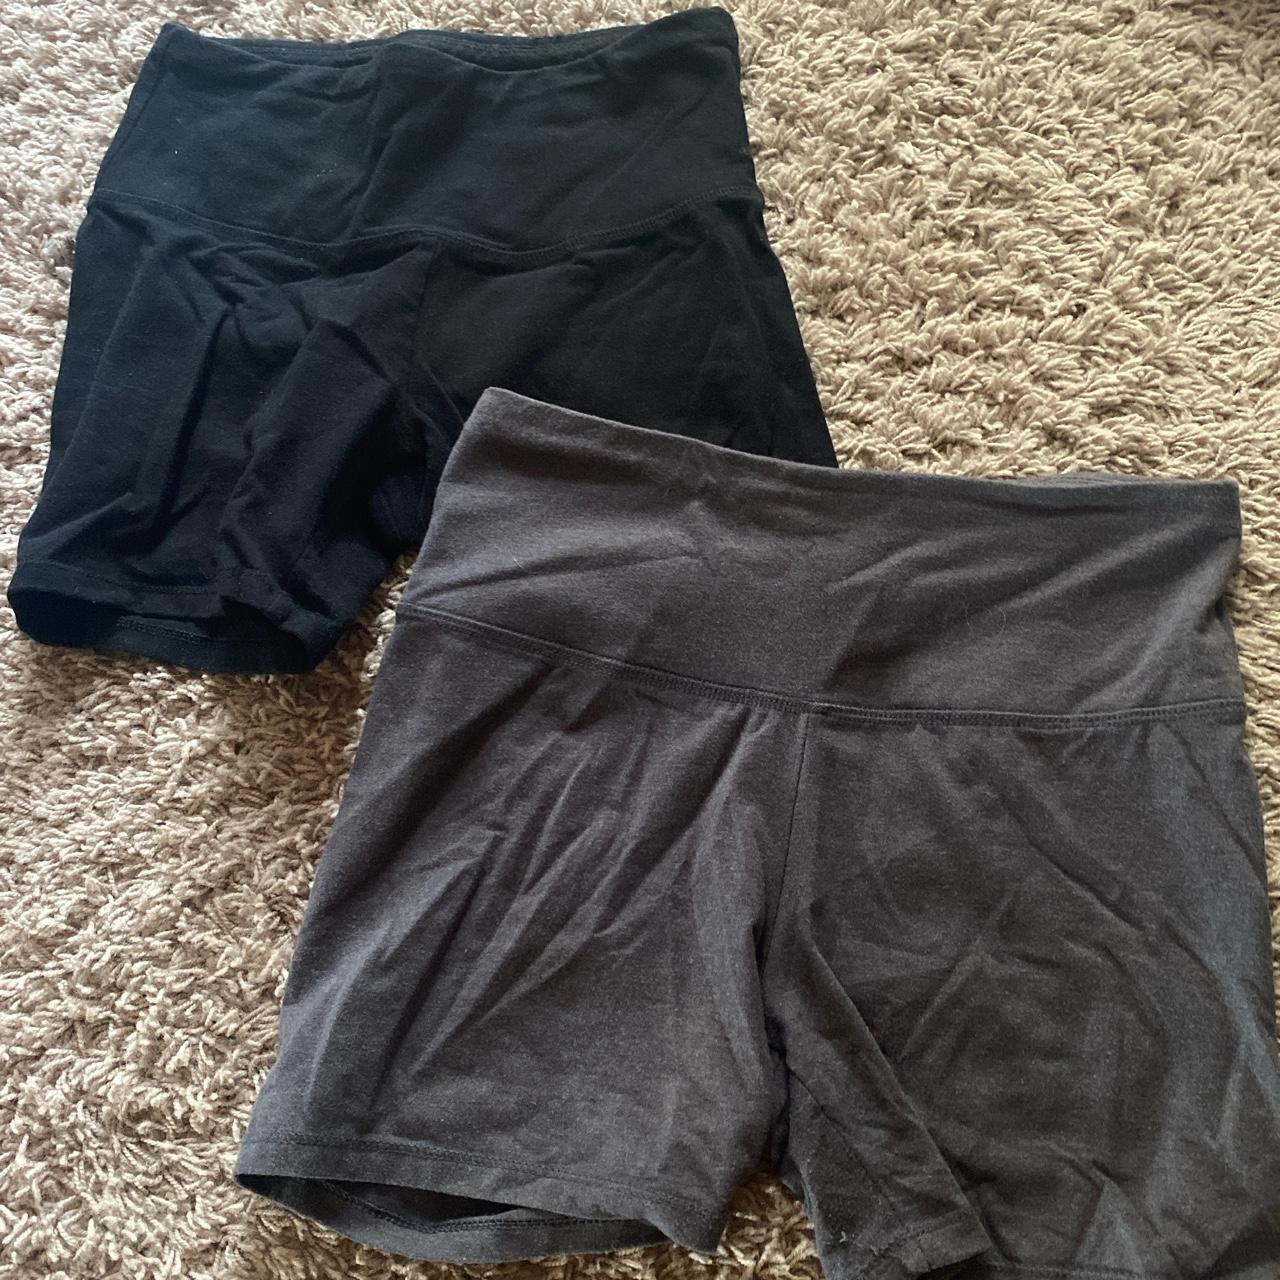 Product Image 1 - Grey and black shorts!! 2